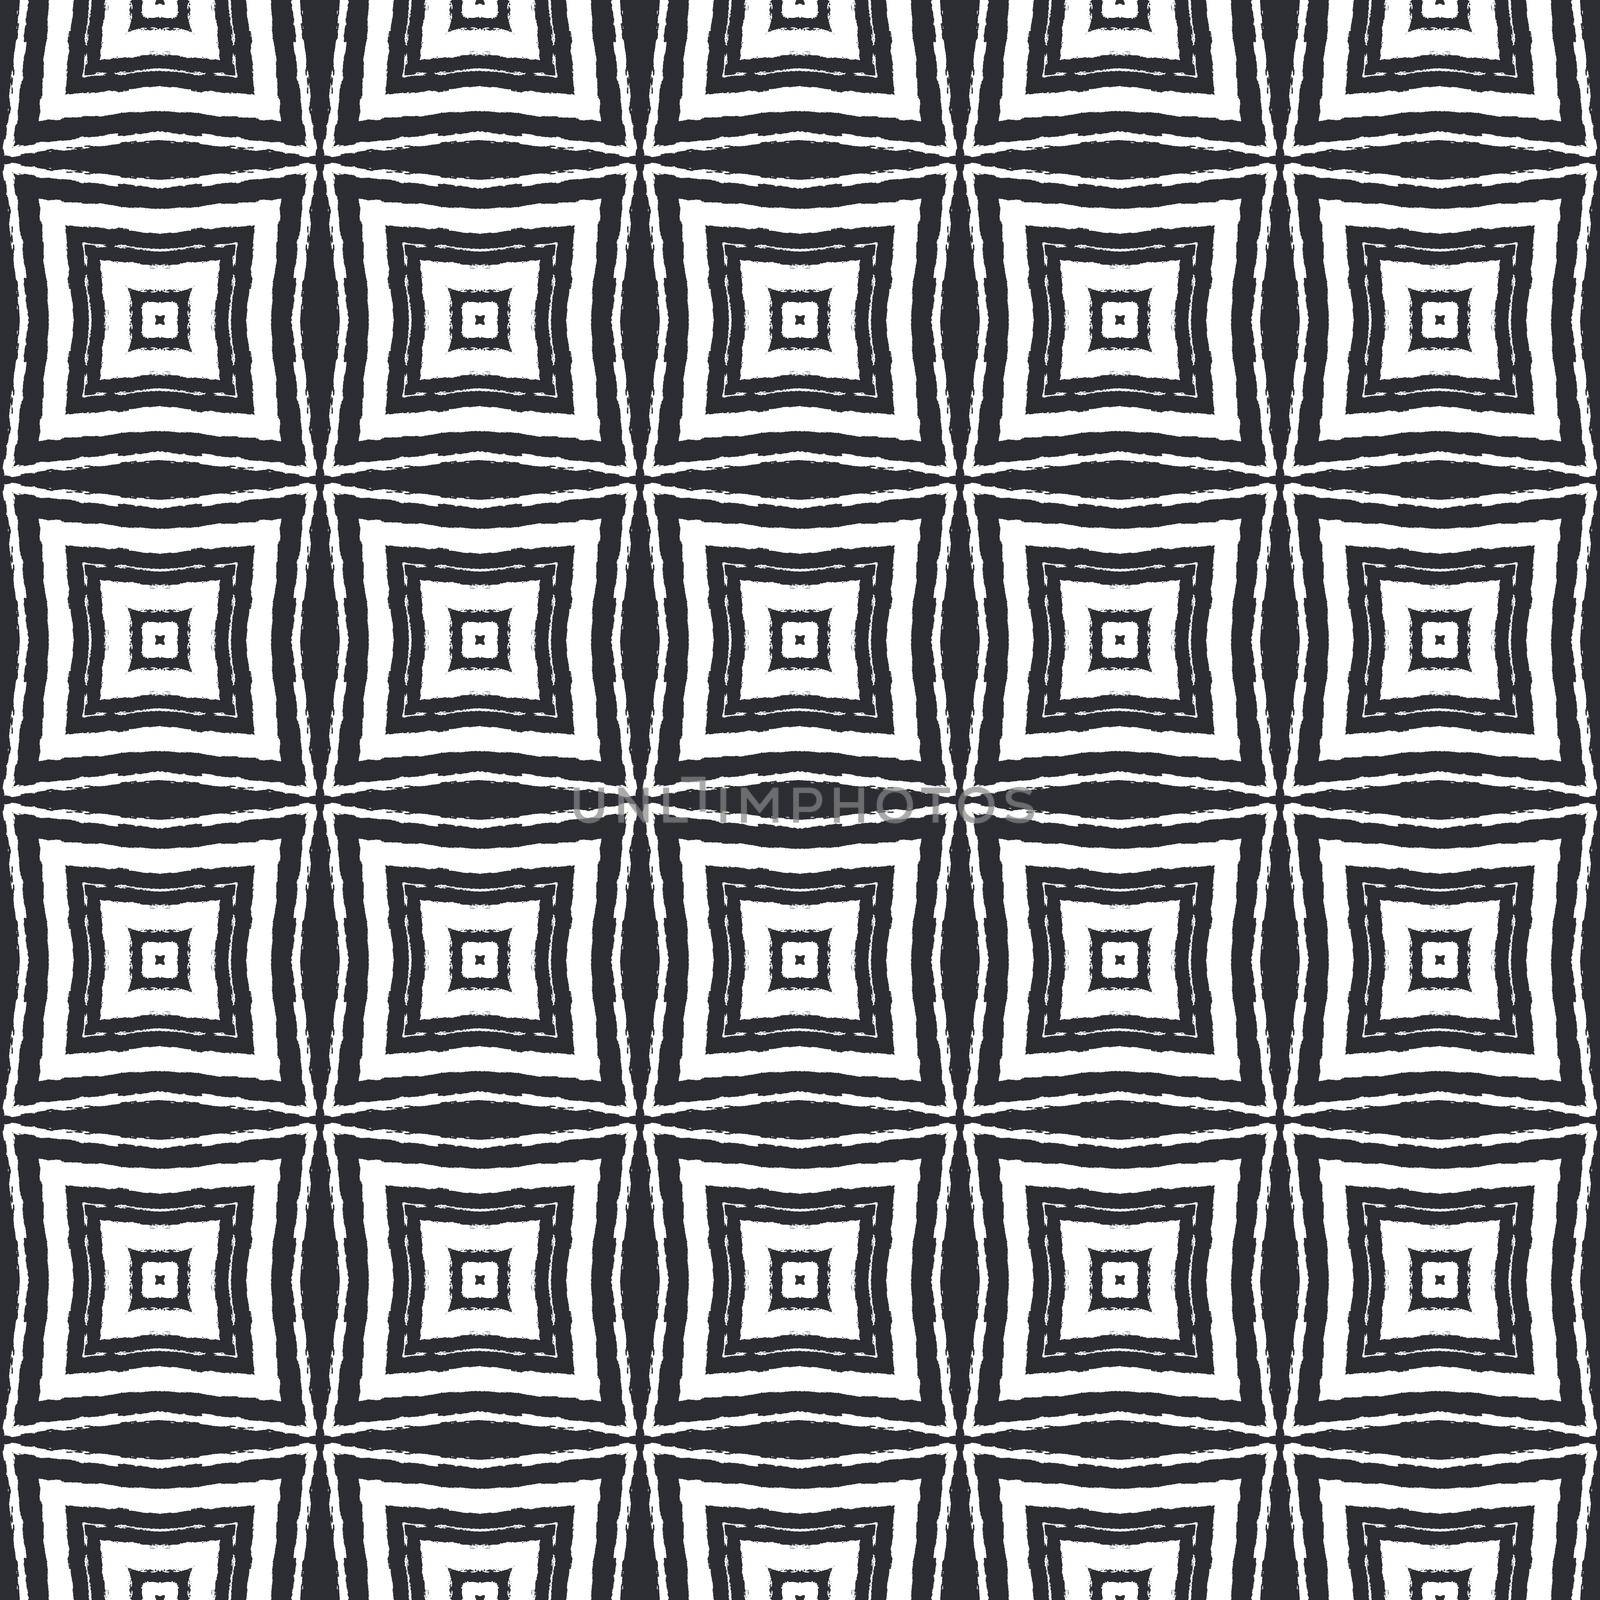 Arabesque hand drawn pattern. Black symmetrical kaleidoscope background. Oriental arabesque hand drawn design. Textile ready marvelous print, swimwear fabric, wallpaper, wrapping.